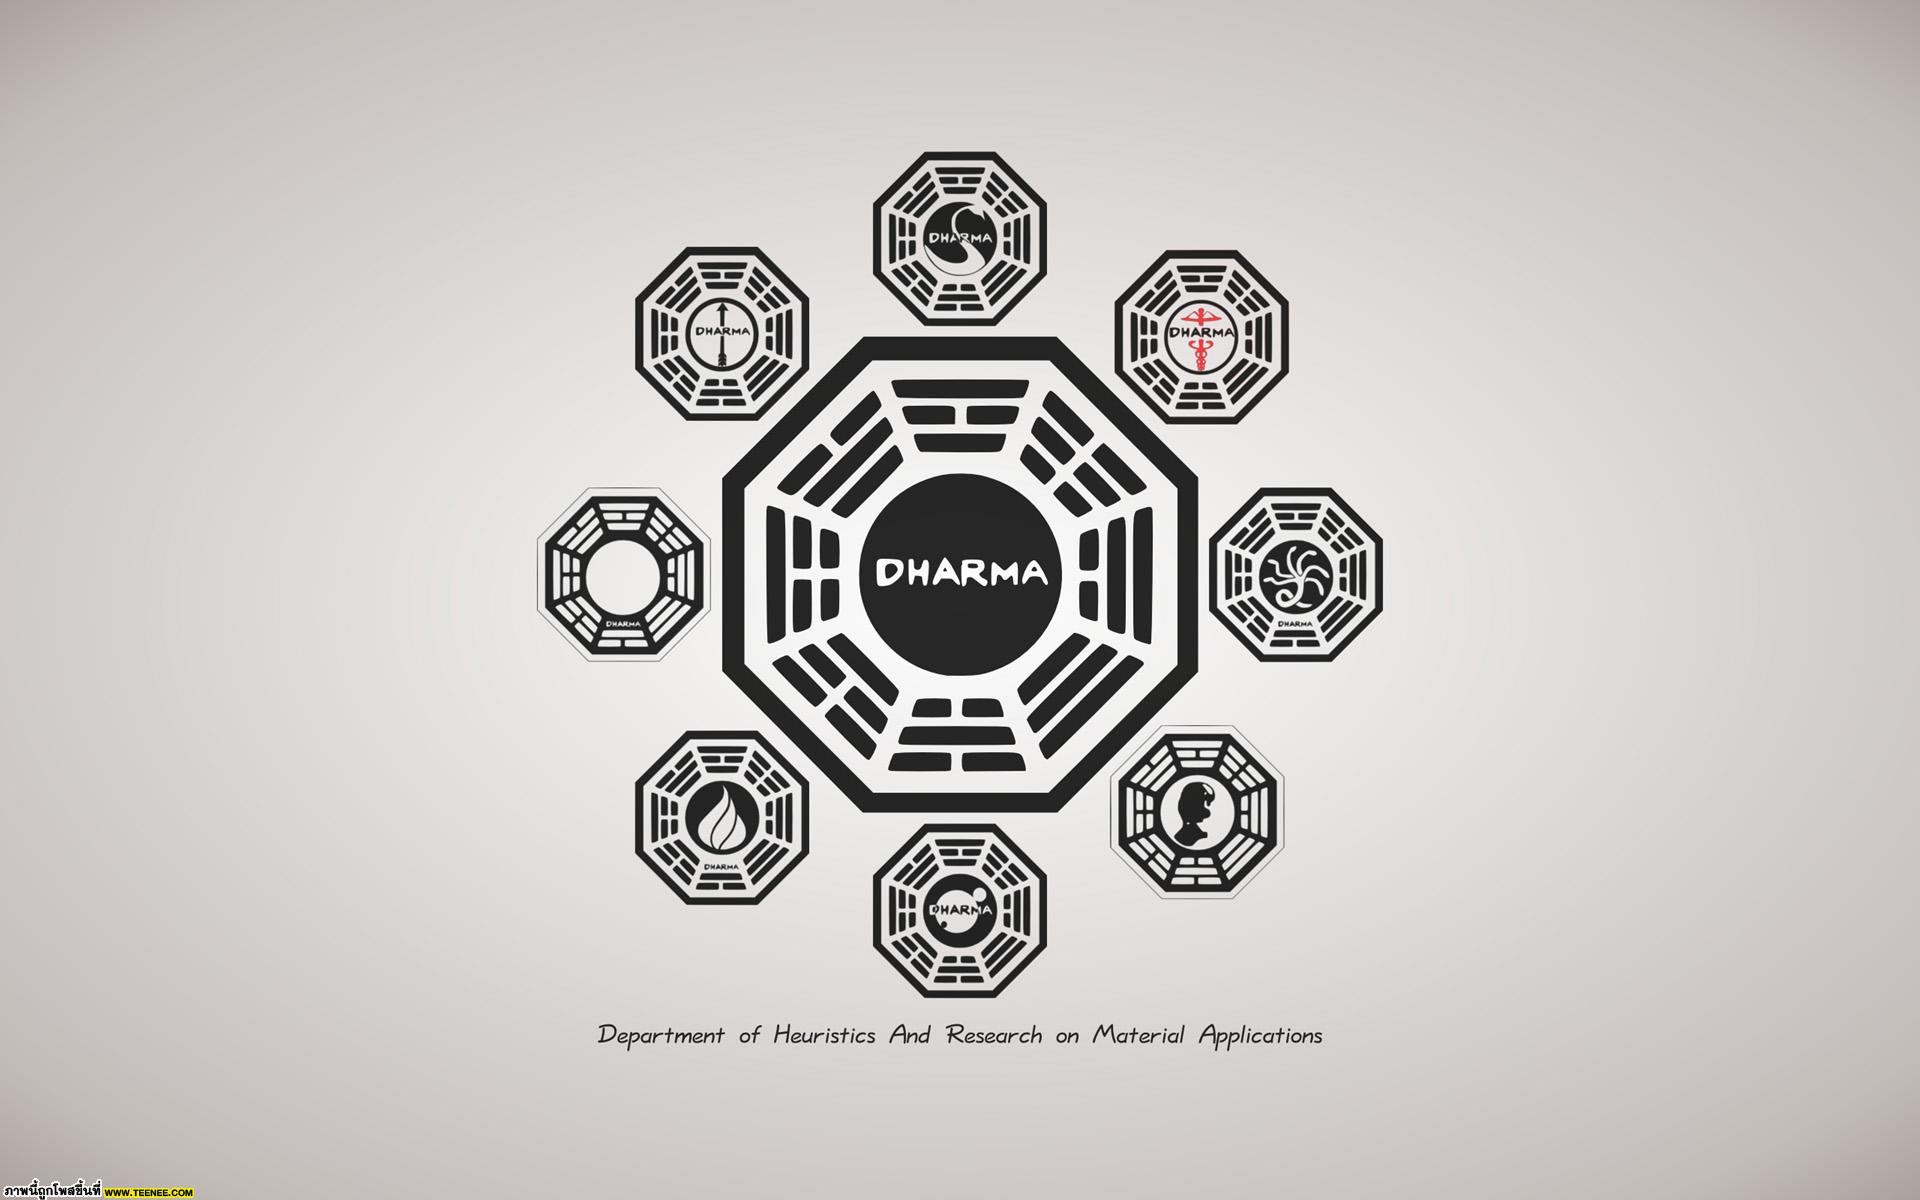 Dharma_Initiative